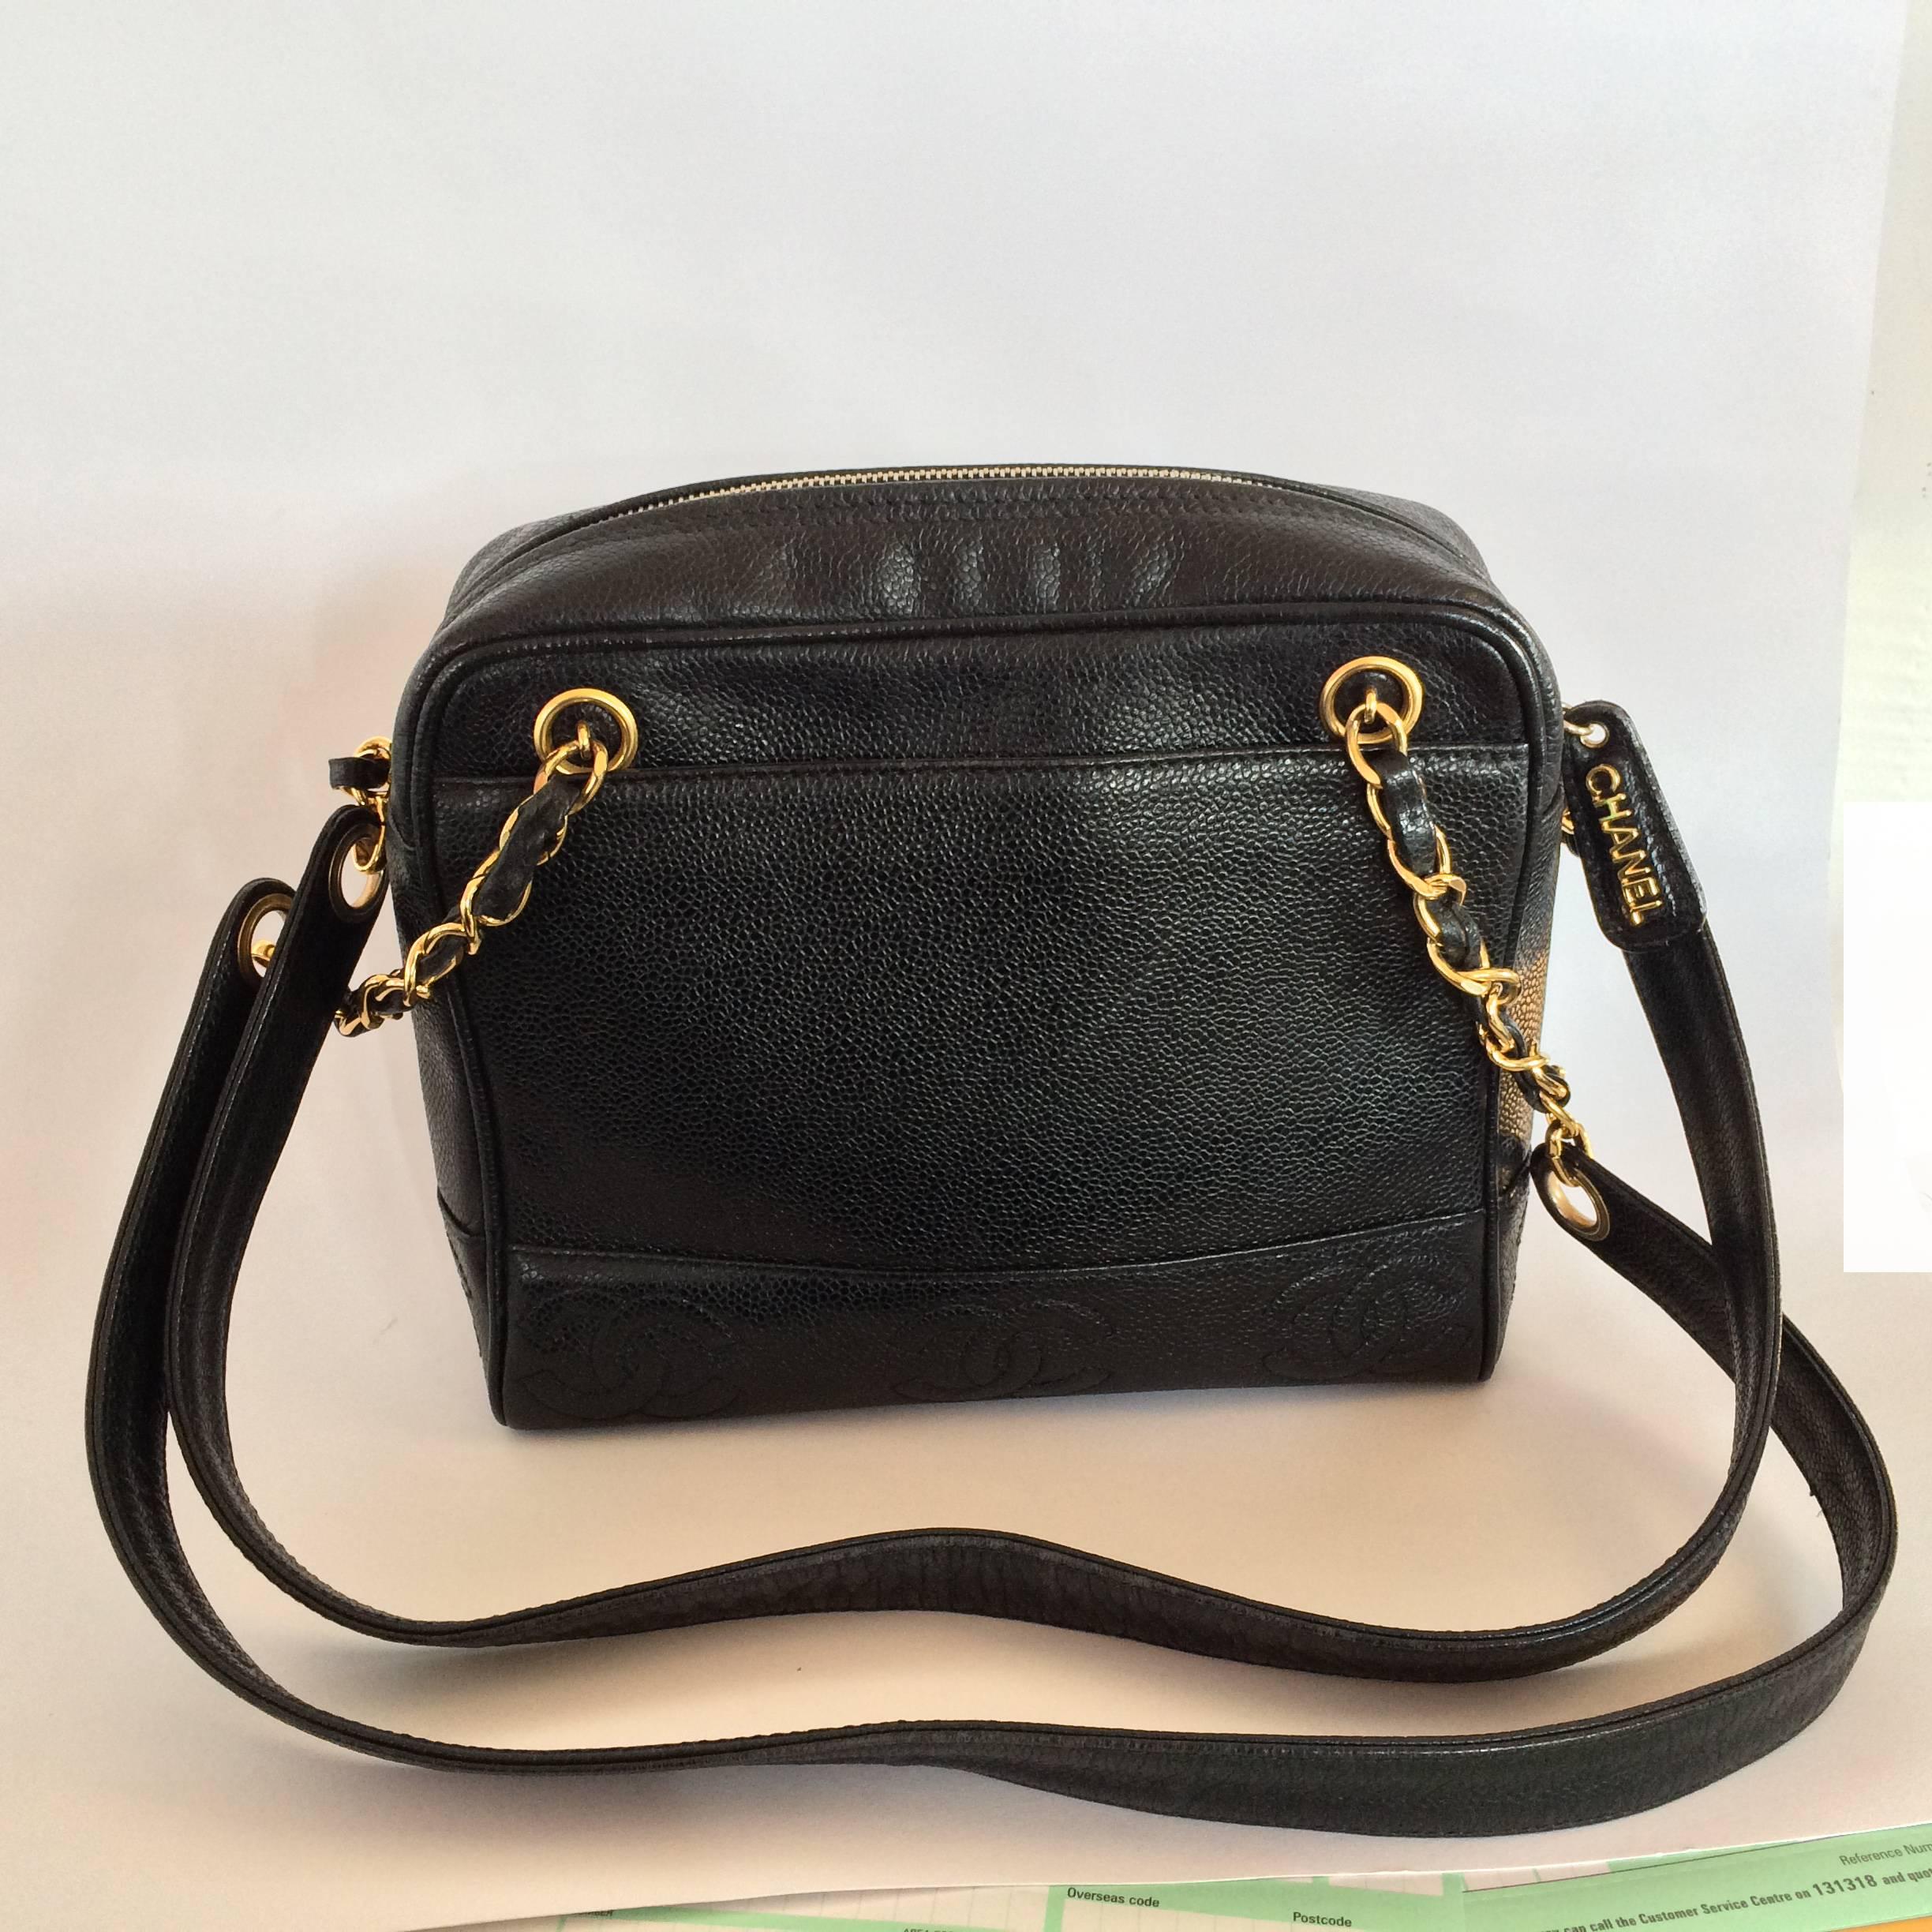 Chanel black caviar leather crossbody bag handbag 5